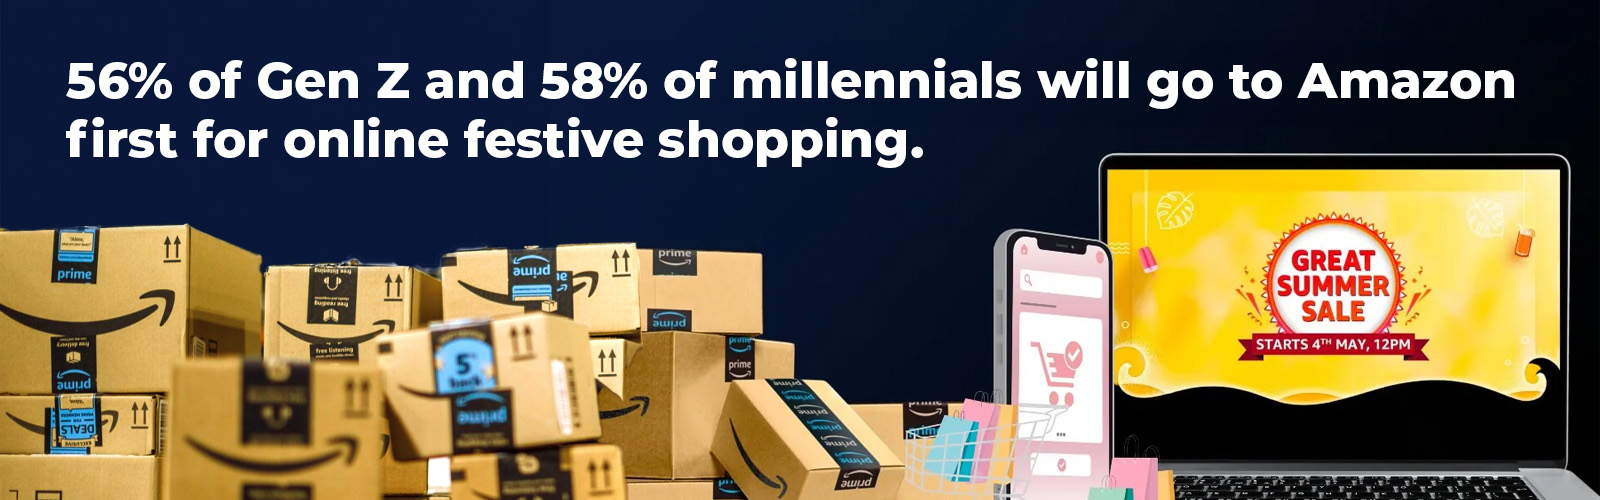 Amazon the preferred online shopping destination for Gen Z